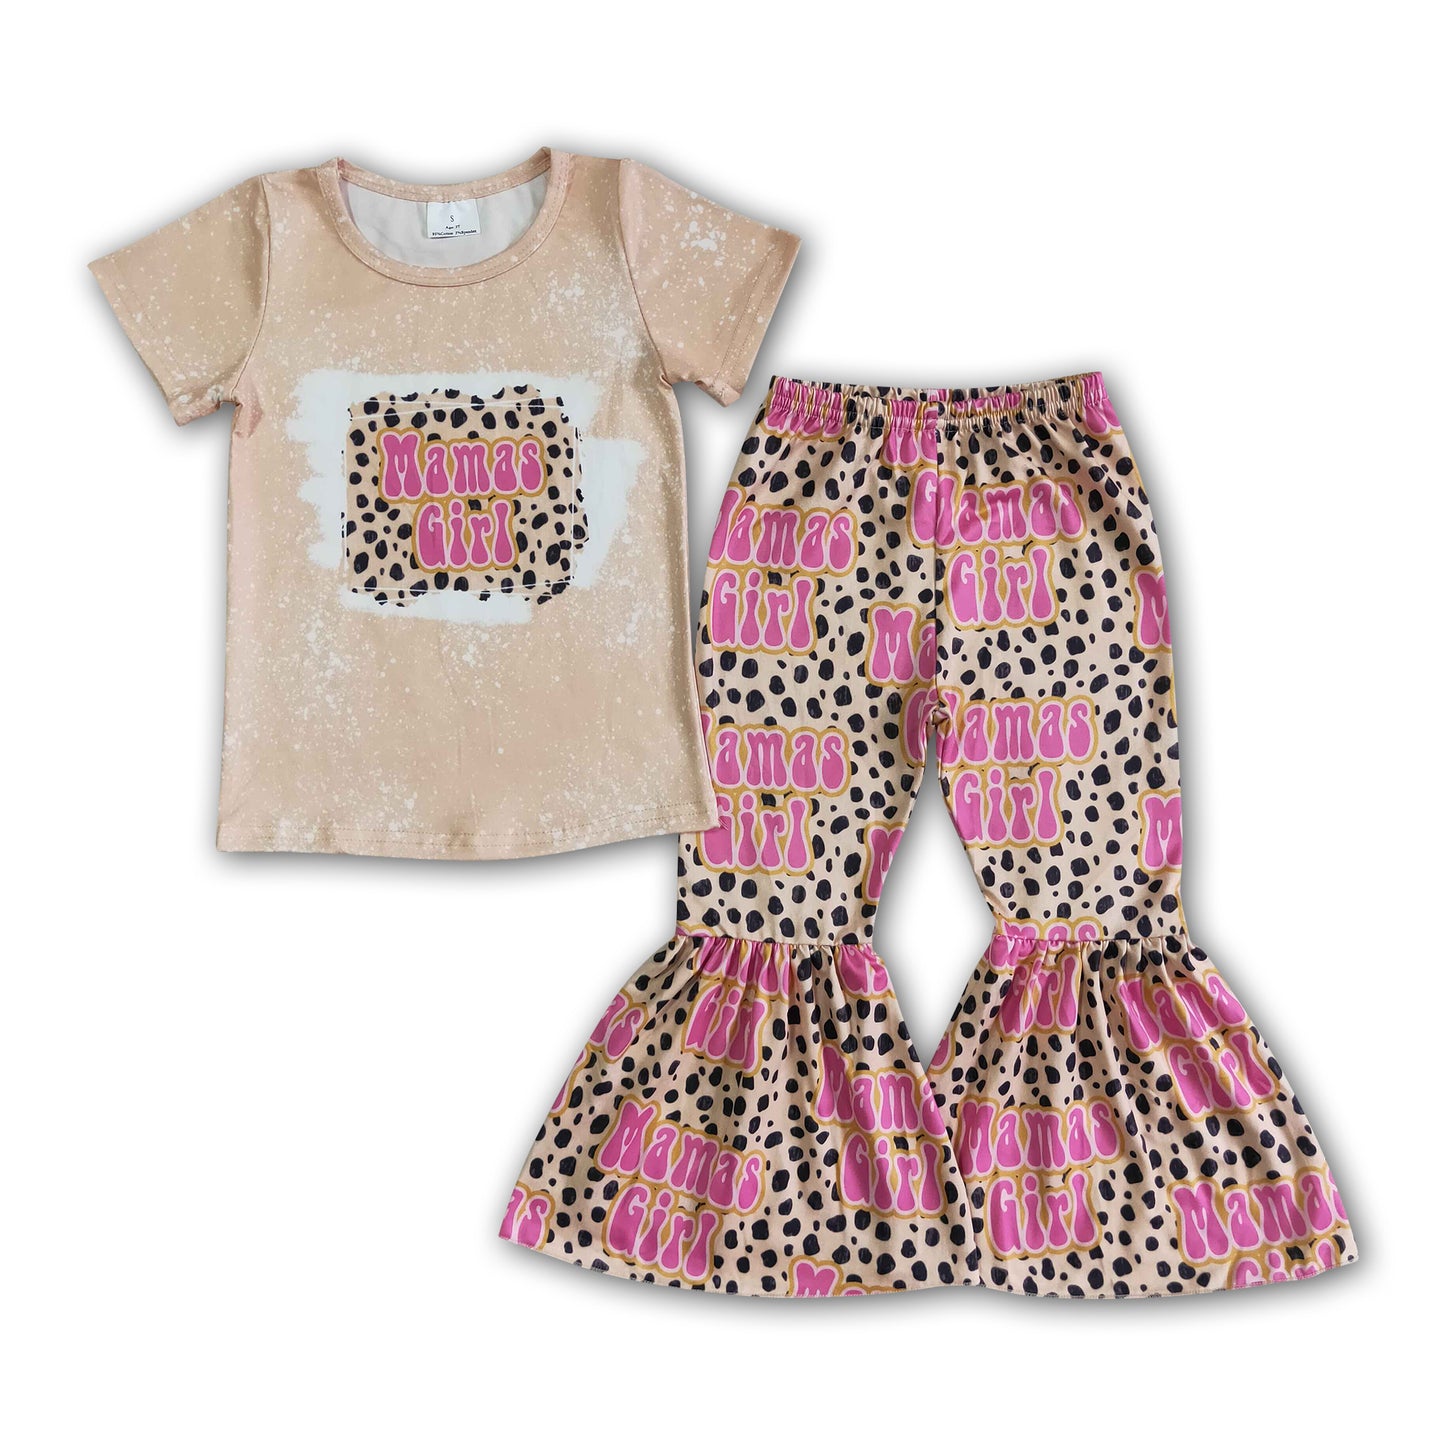 Mamas girl shirt leopard pants girls boutique clothing